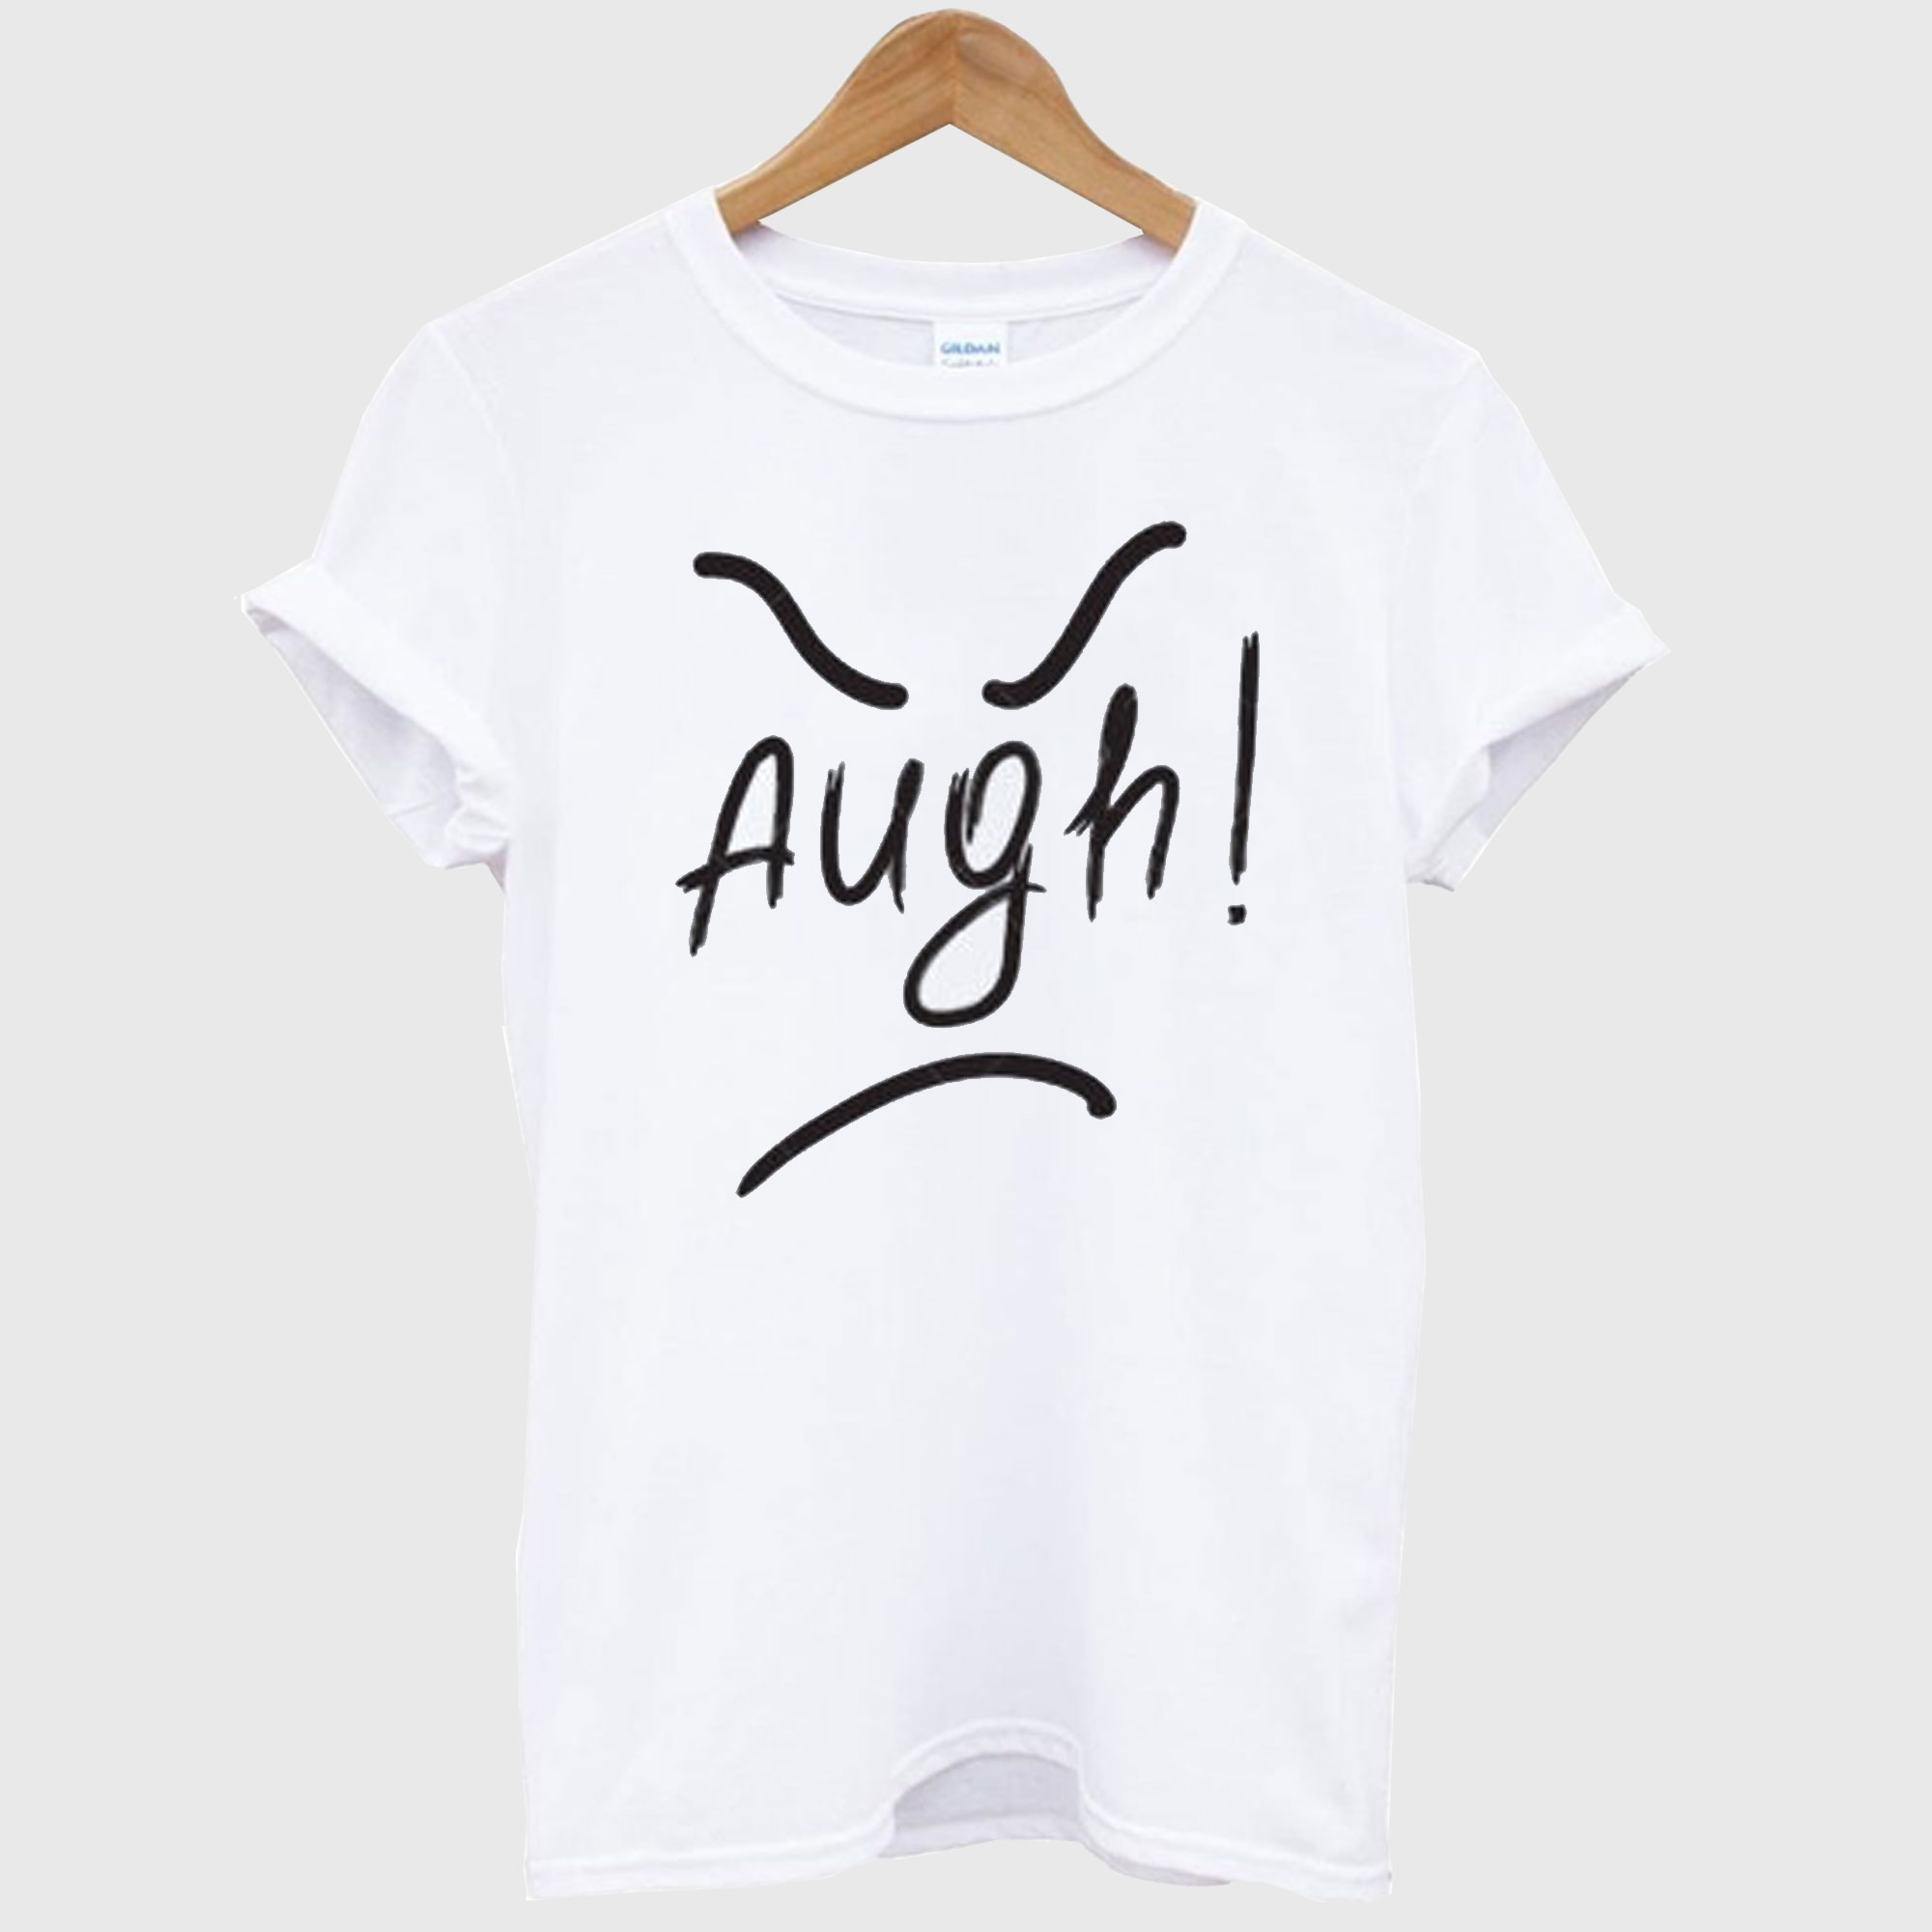 Augh! T Shirt